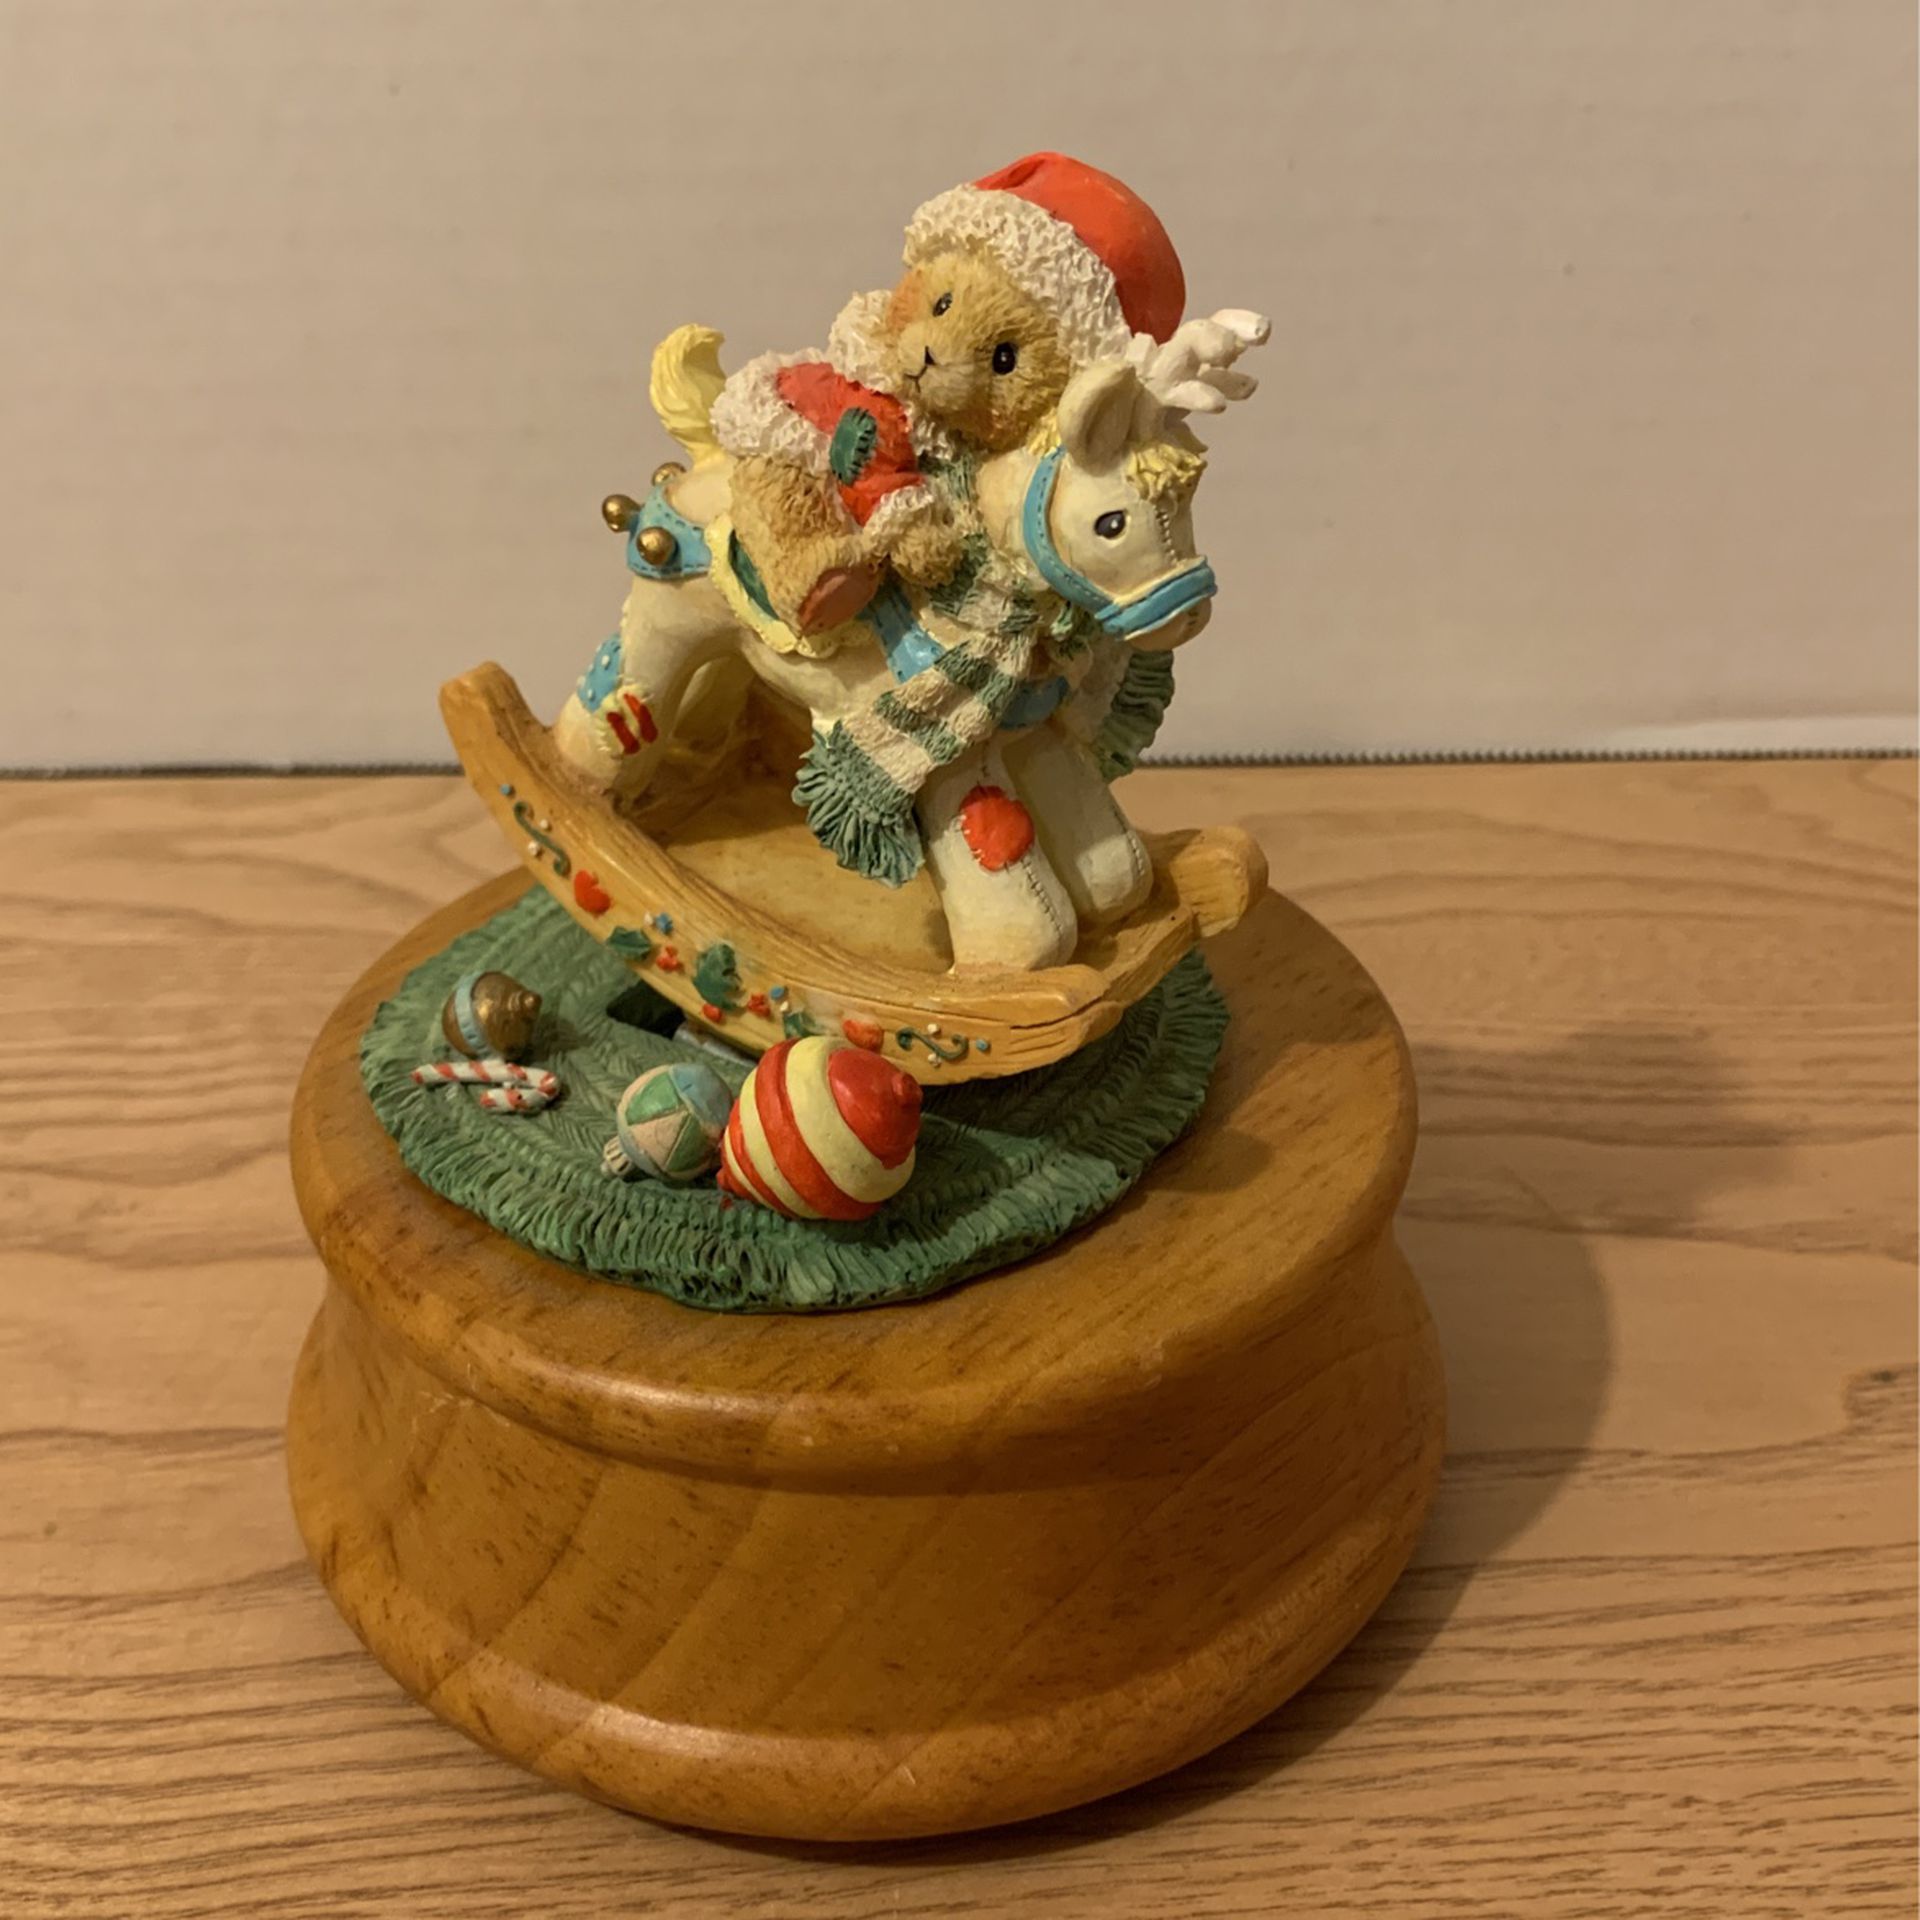 1992 cherished teddies Christmas music box with Rockinghorse play jingle bells